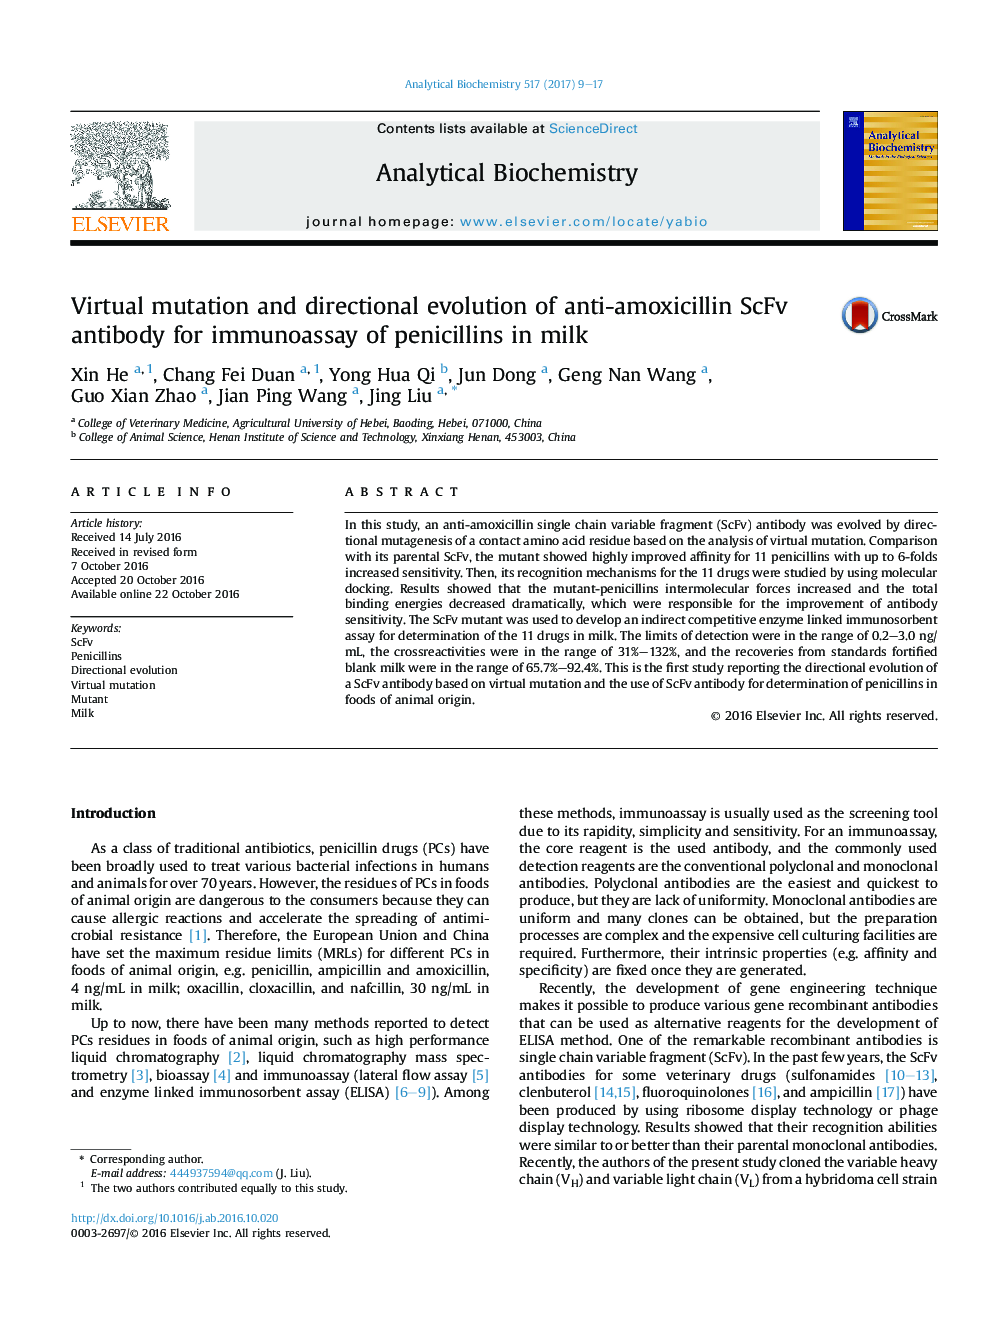 Virtual mutation and directional evolution of anti-amoxicillin ScFv antibody for immunoassay of penicillins in milk